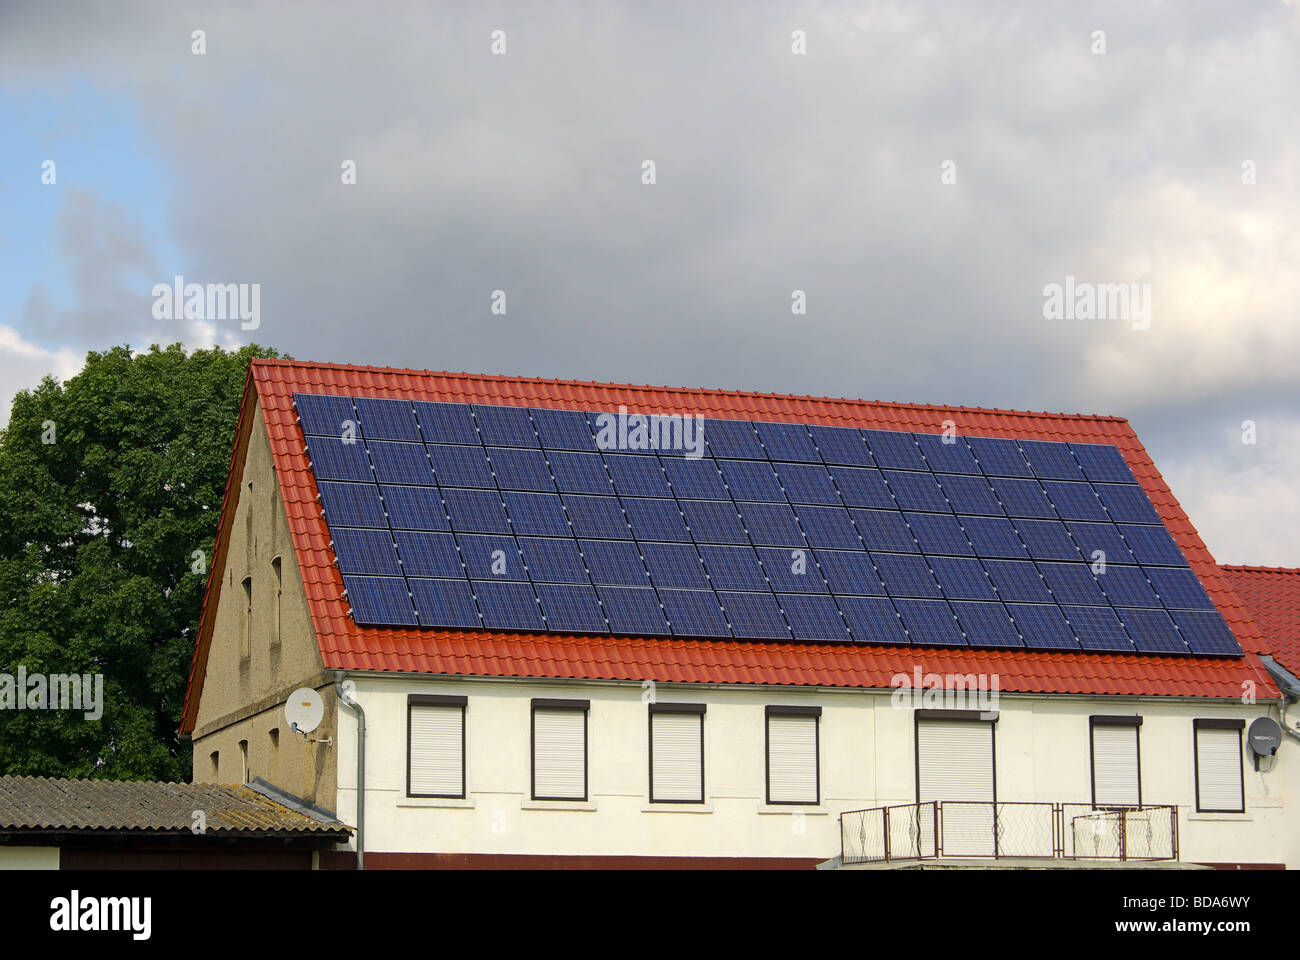 Solaranlage solar plant 42 Stock Photo